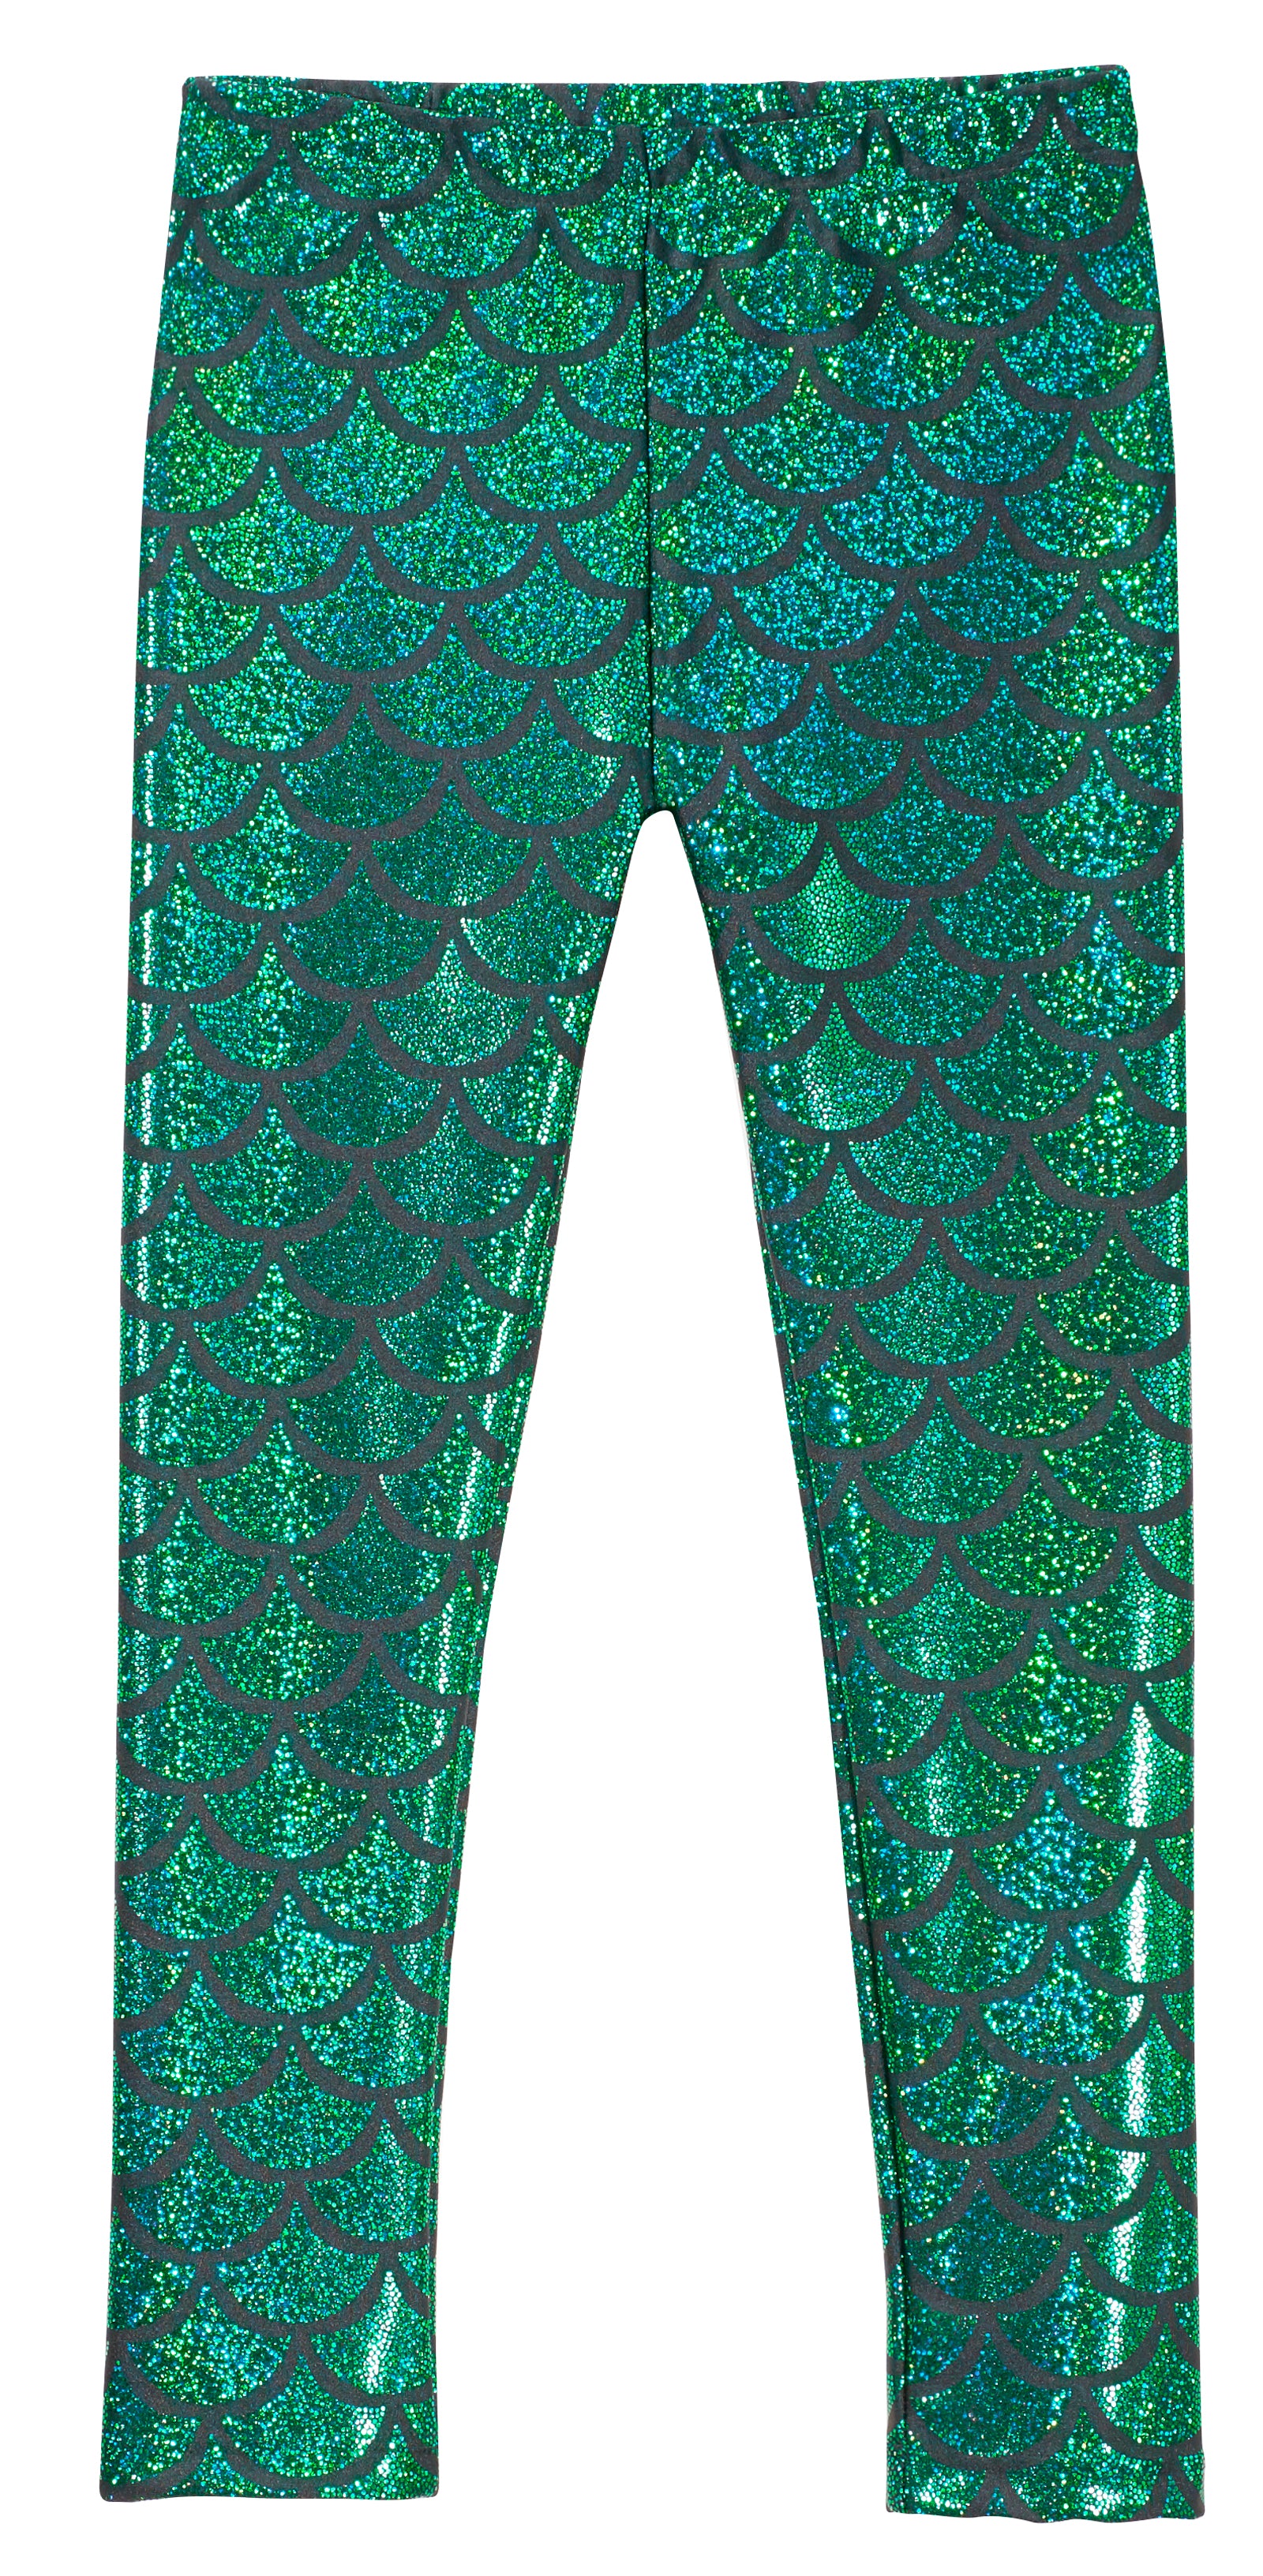 Mermaid Scale Leggings 3D Printed Women Tight Long Yoga Pants Halloween -  Costumeslive.com